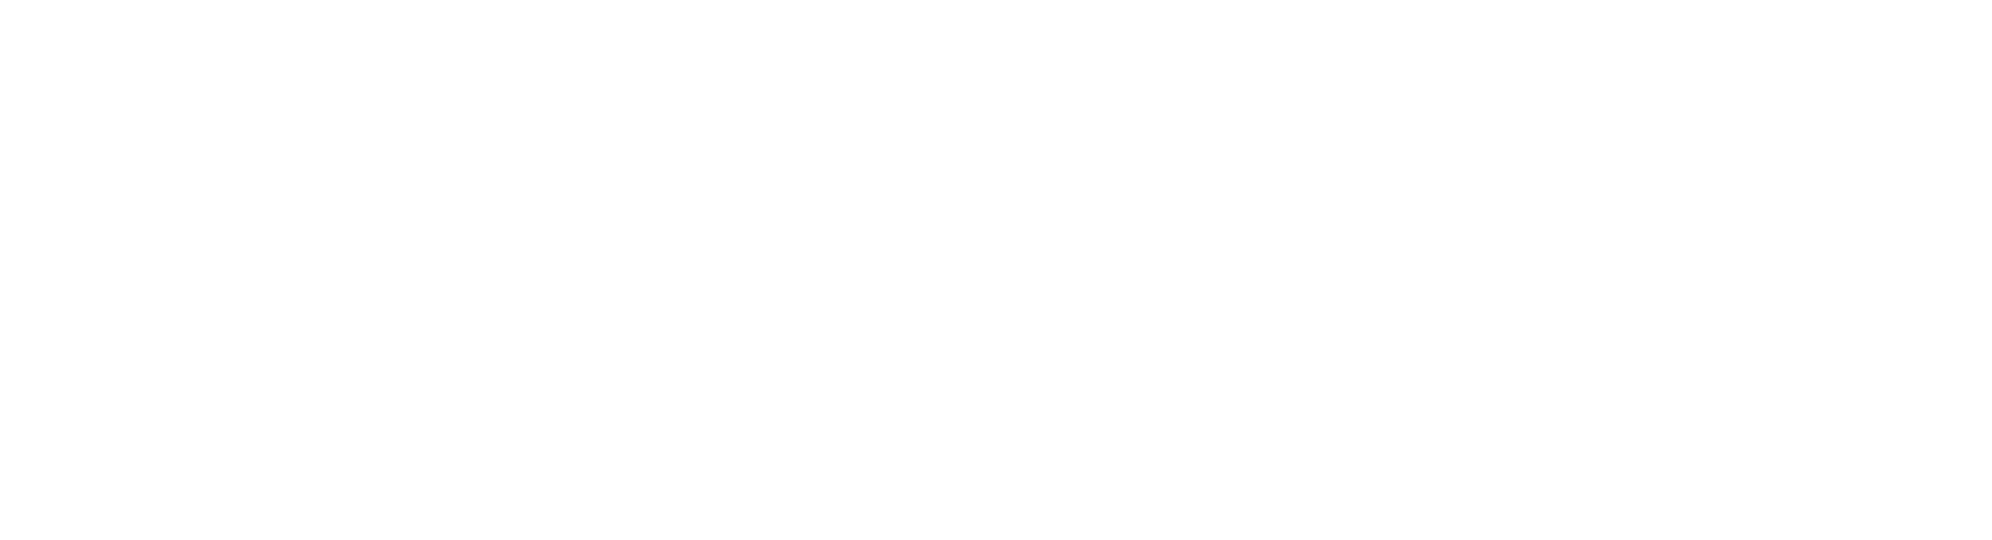 songkick logo.png